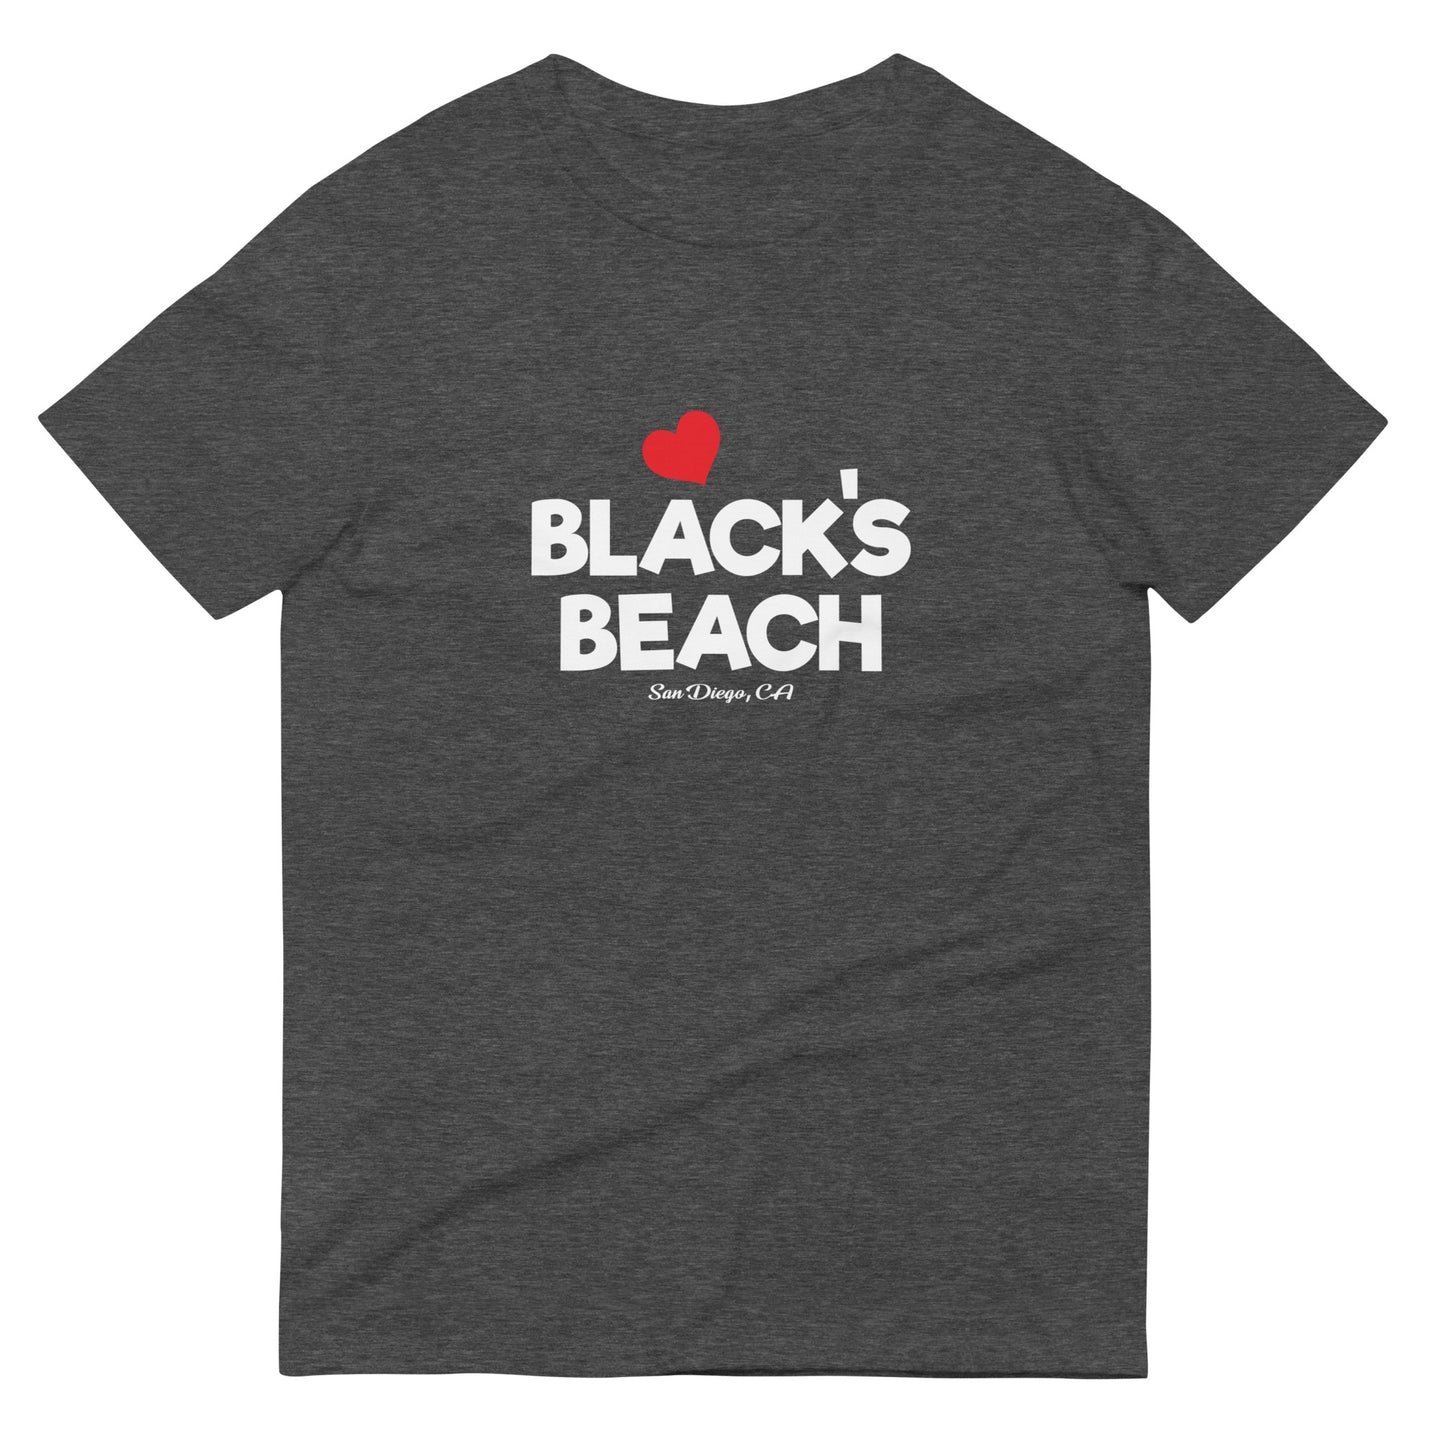 Black's Beach Tees / Style 02 / Short-Sleeve T-Shirt